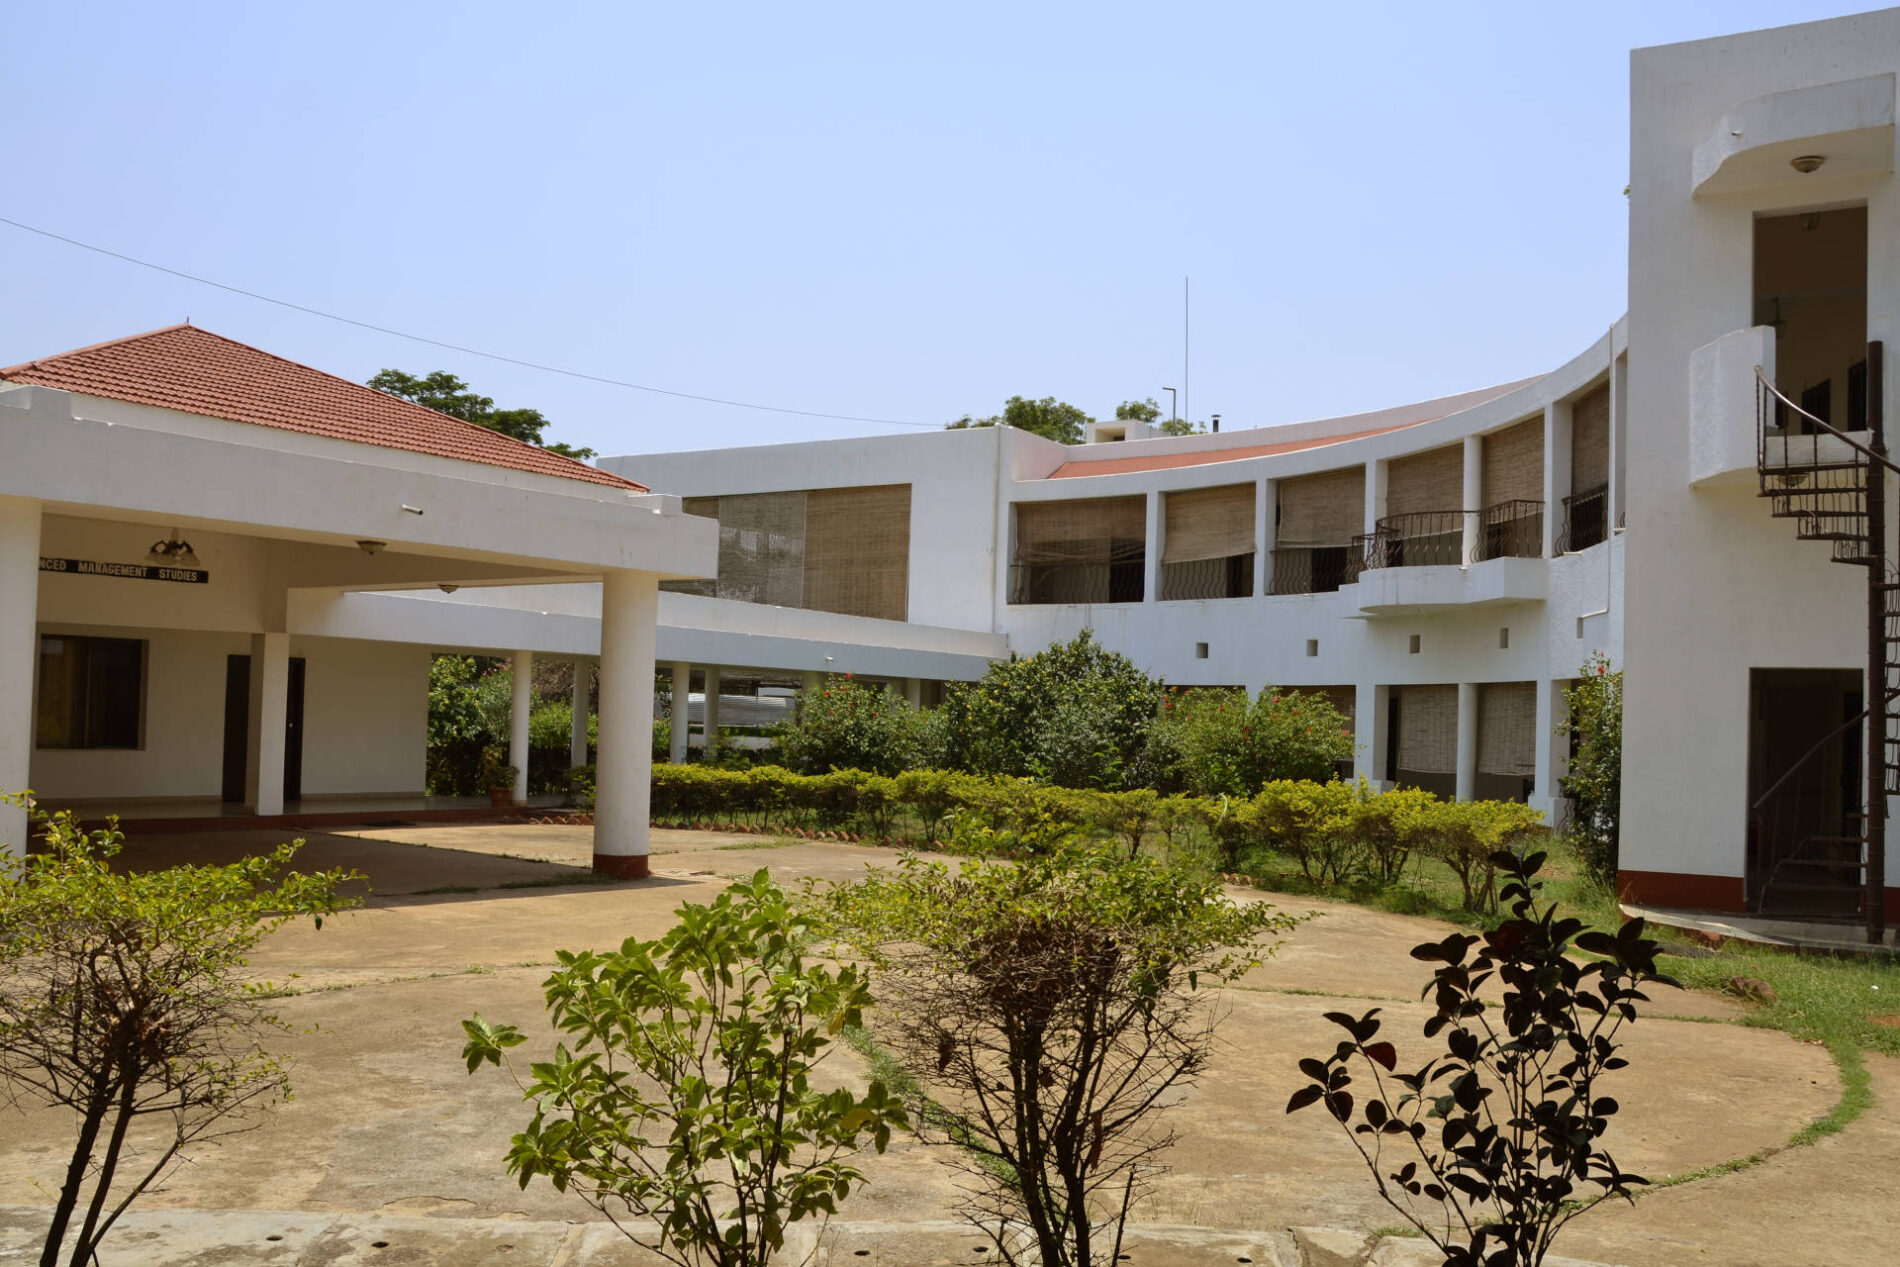 Kirloskar Institute of Advanced Management Studies